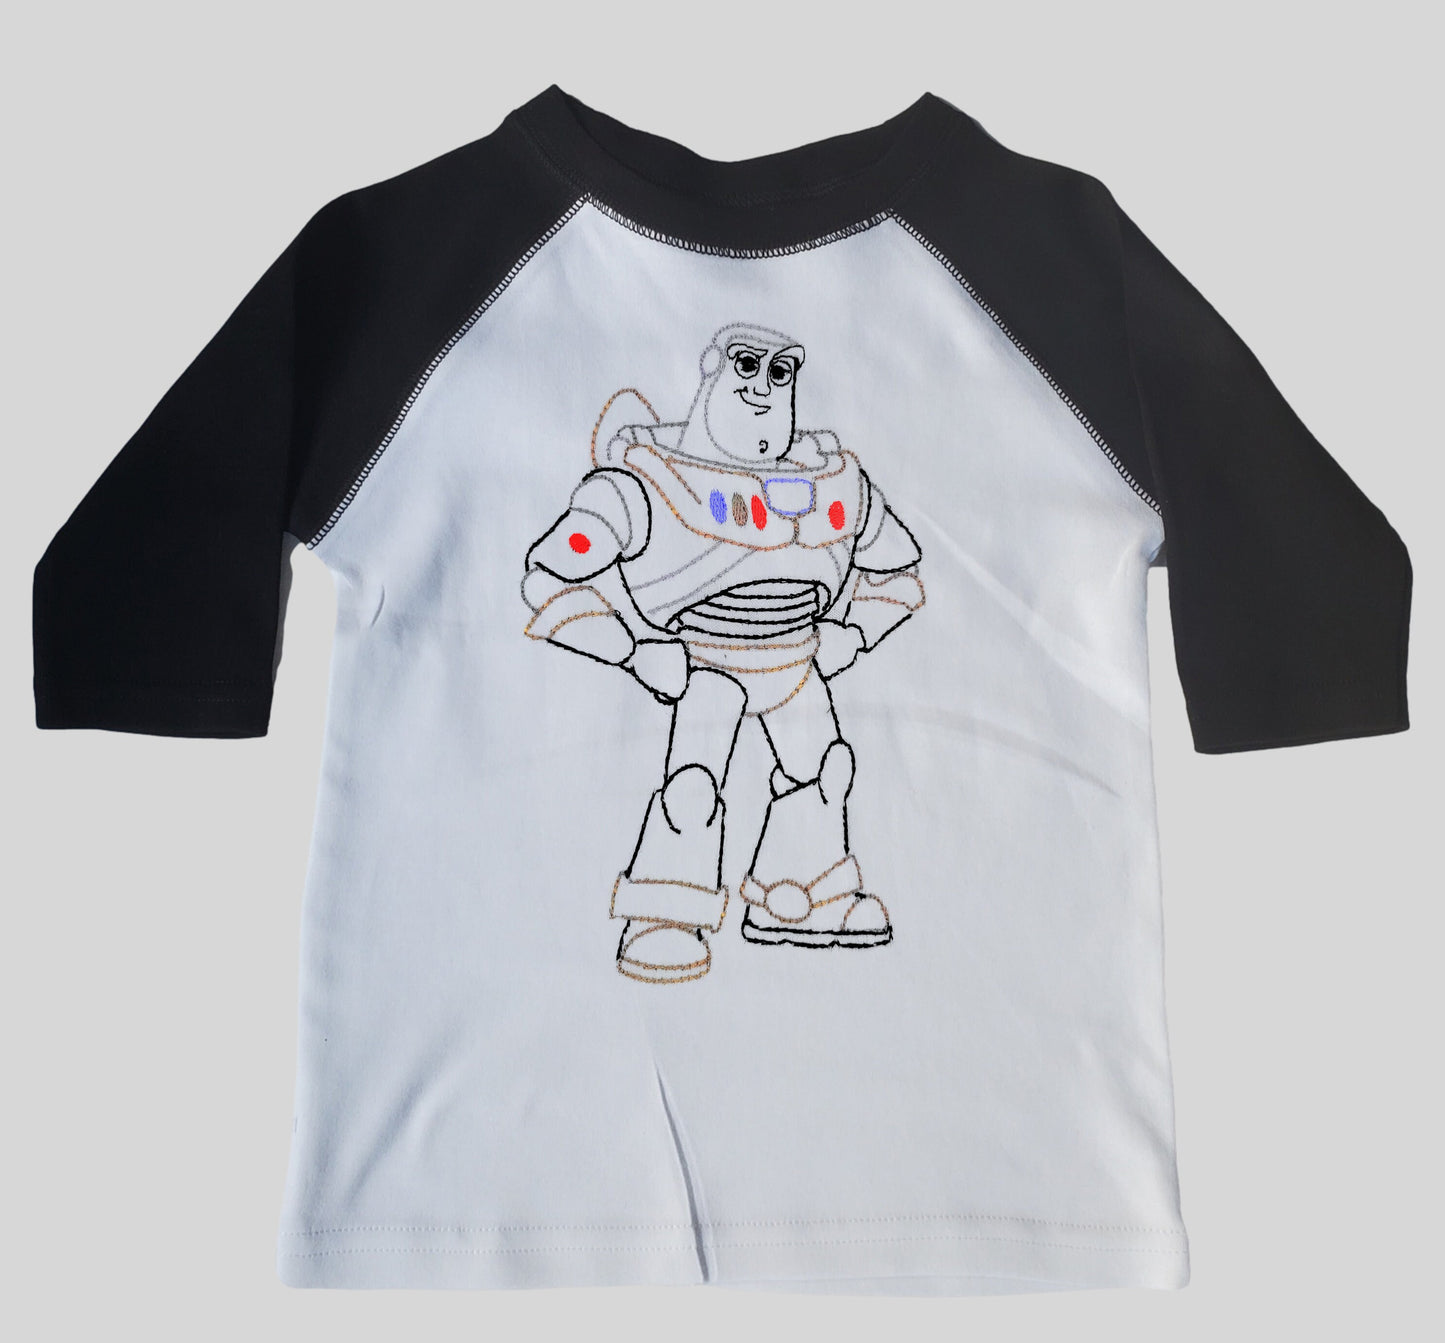 Buzz Lightyear shirt | Buzz Lightyear birthday shirt | Toy Story boys t-shirt